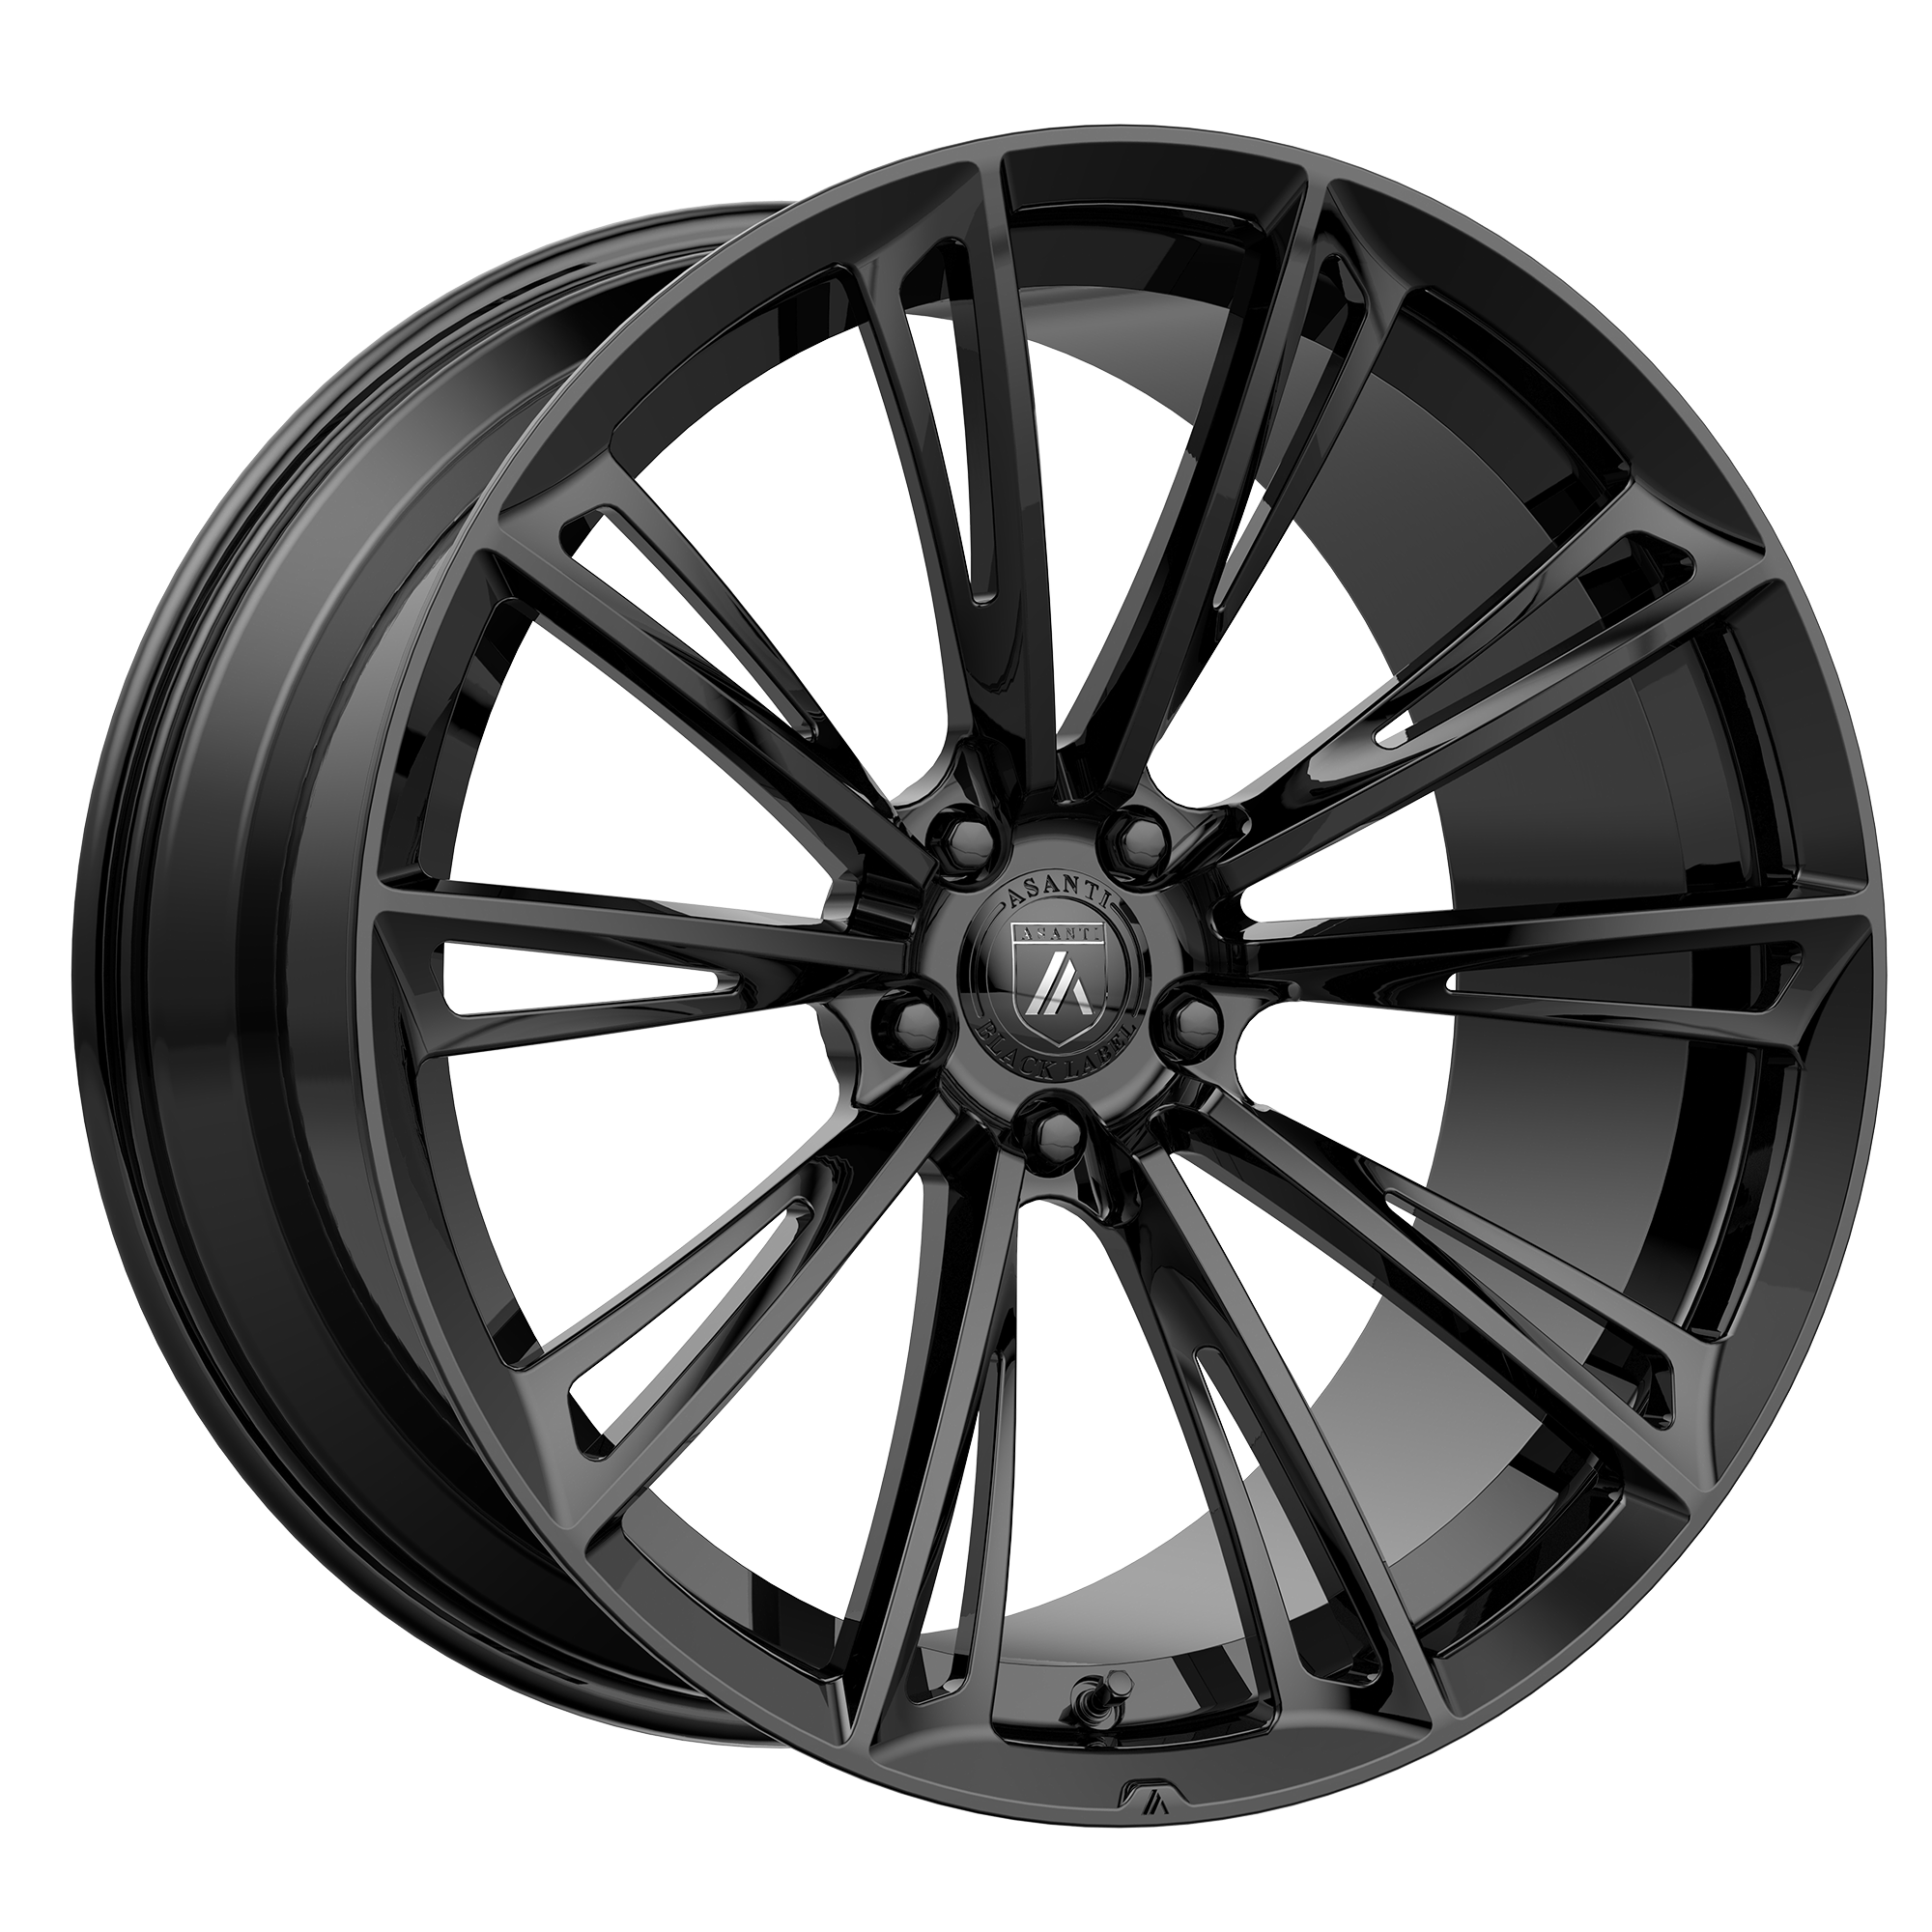 CORONA 20x9 5x115.00 GLOSS BLACK (15 mm) - Tires and Engine Performance